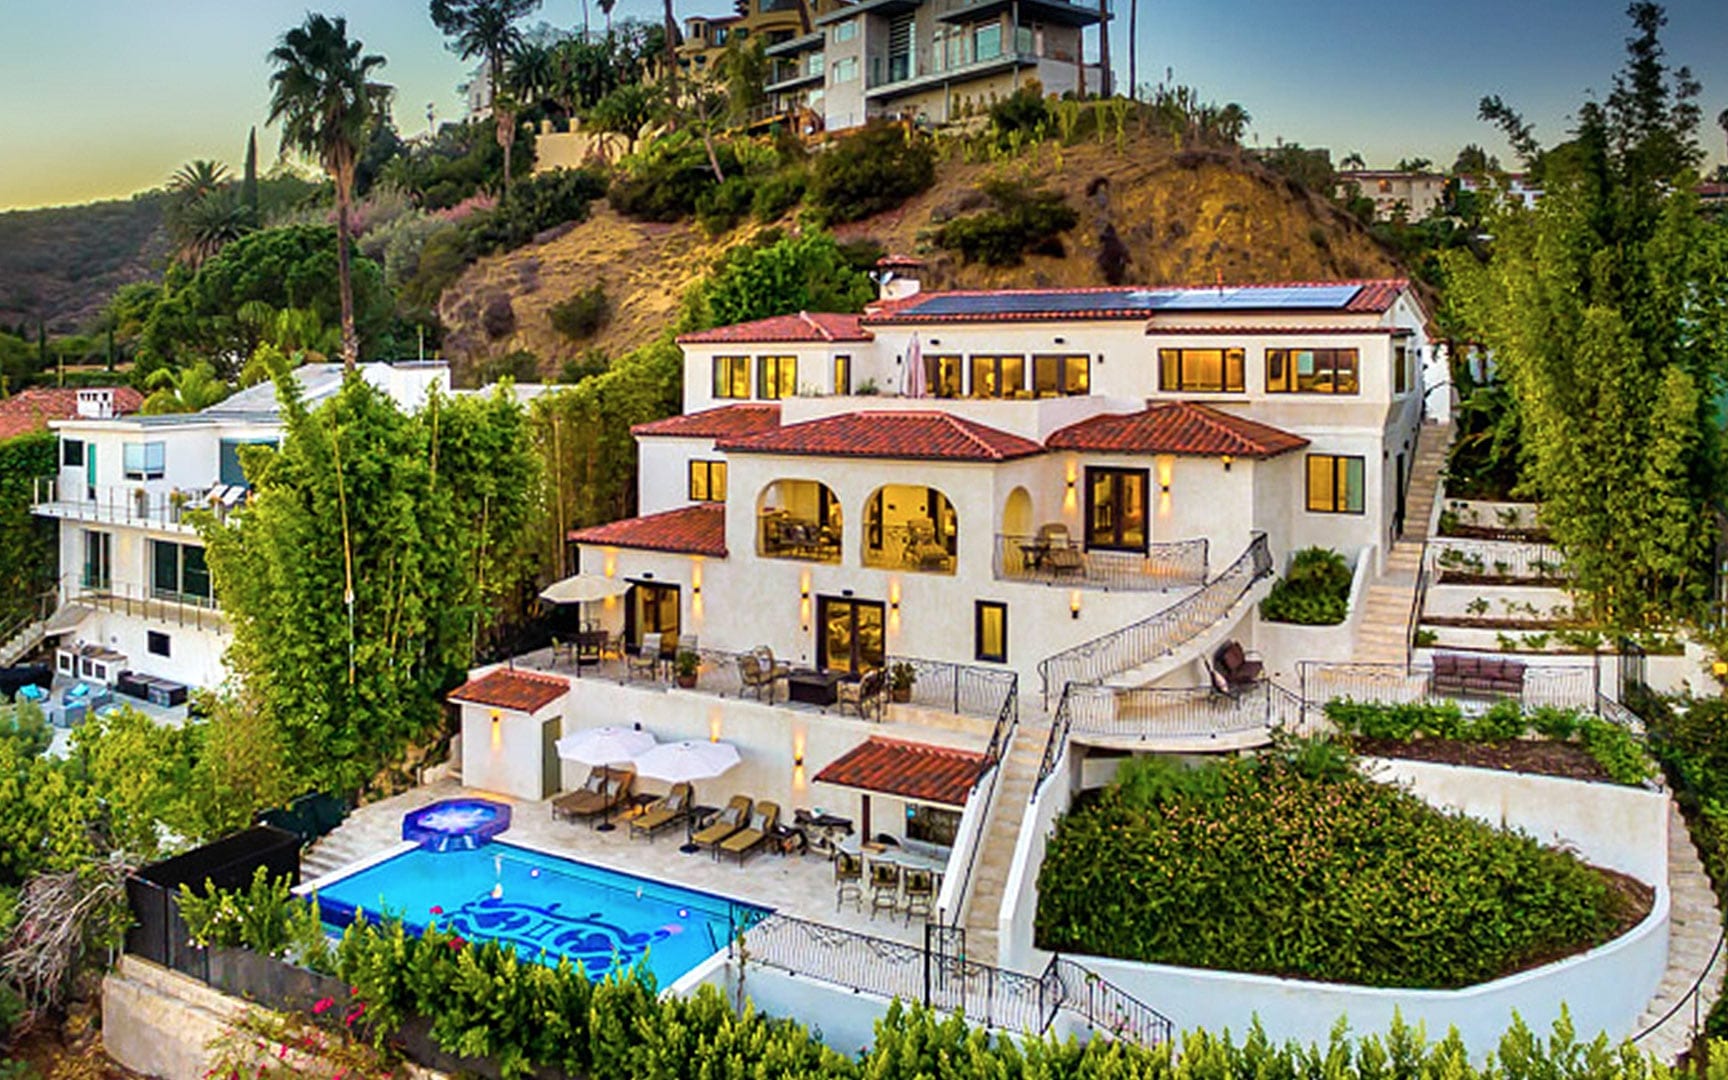 Casa Di Amore Luxury Vacation Rental in Los Angeles | Nomade Villa Collection